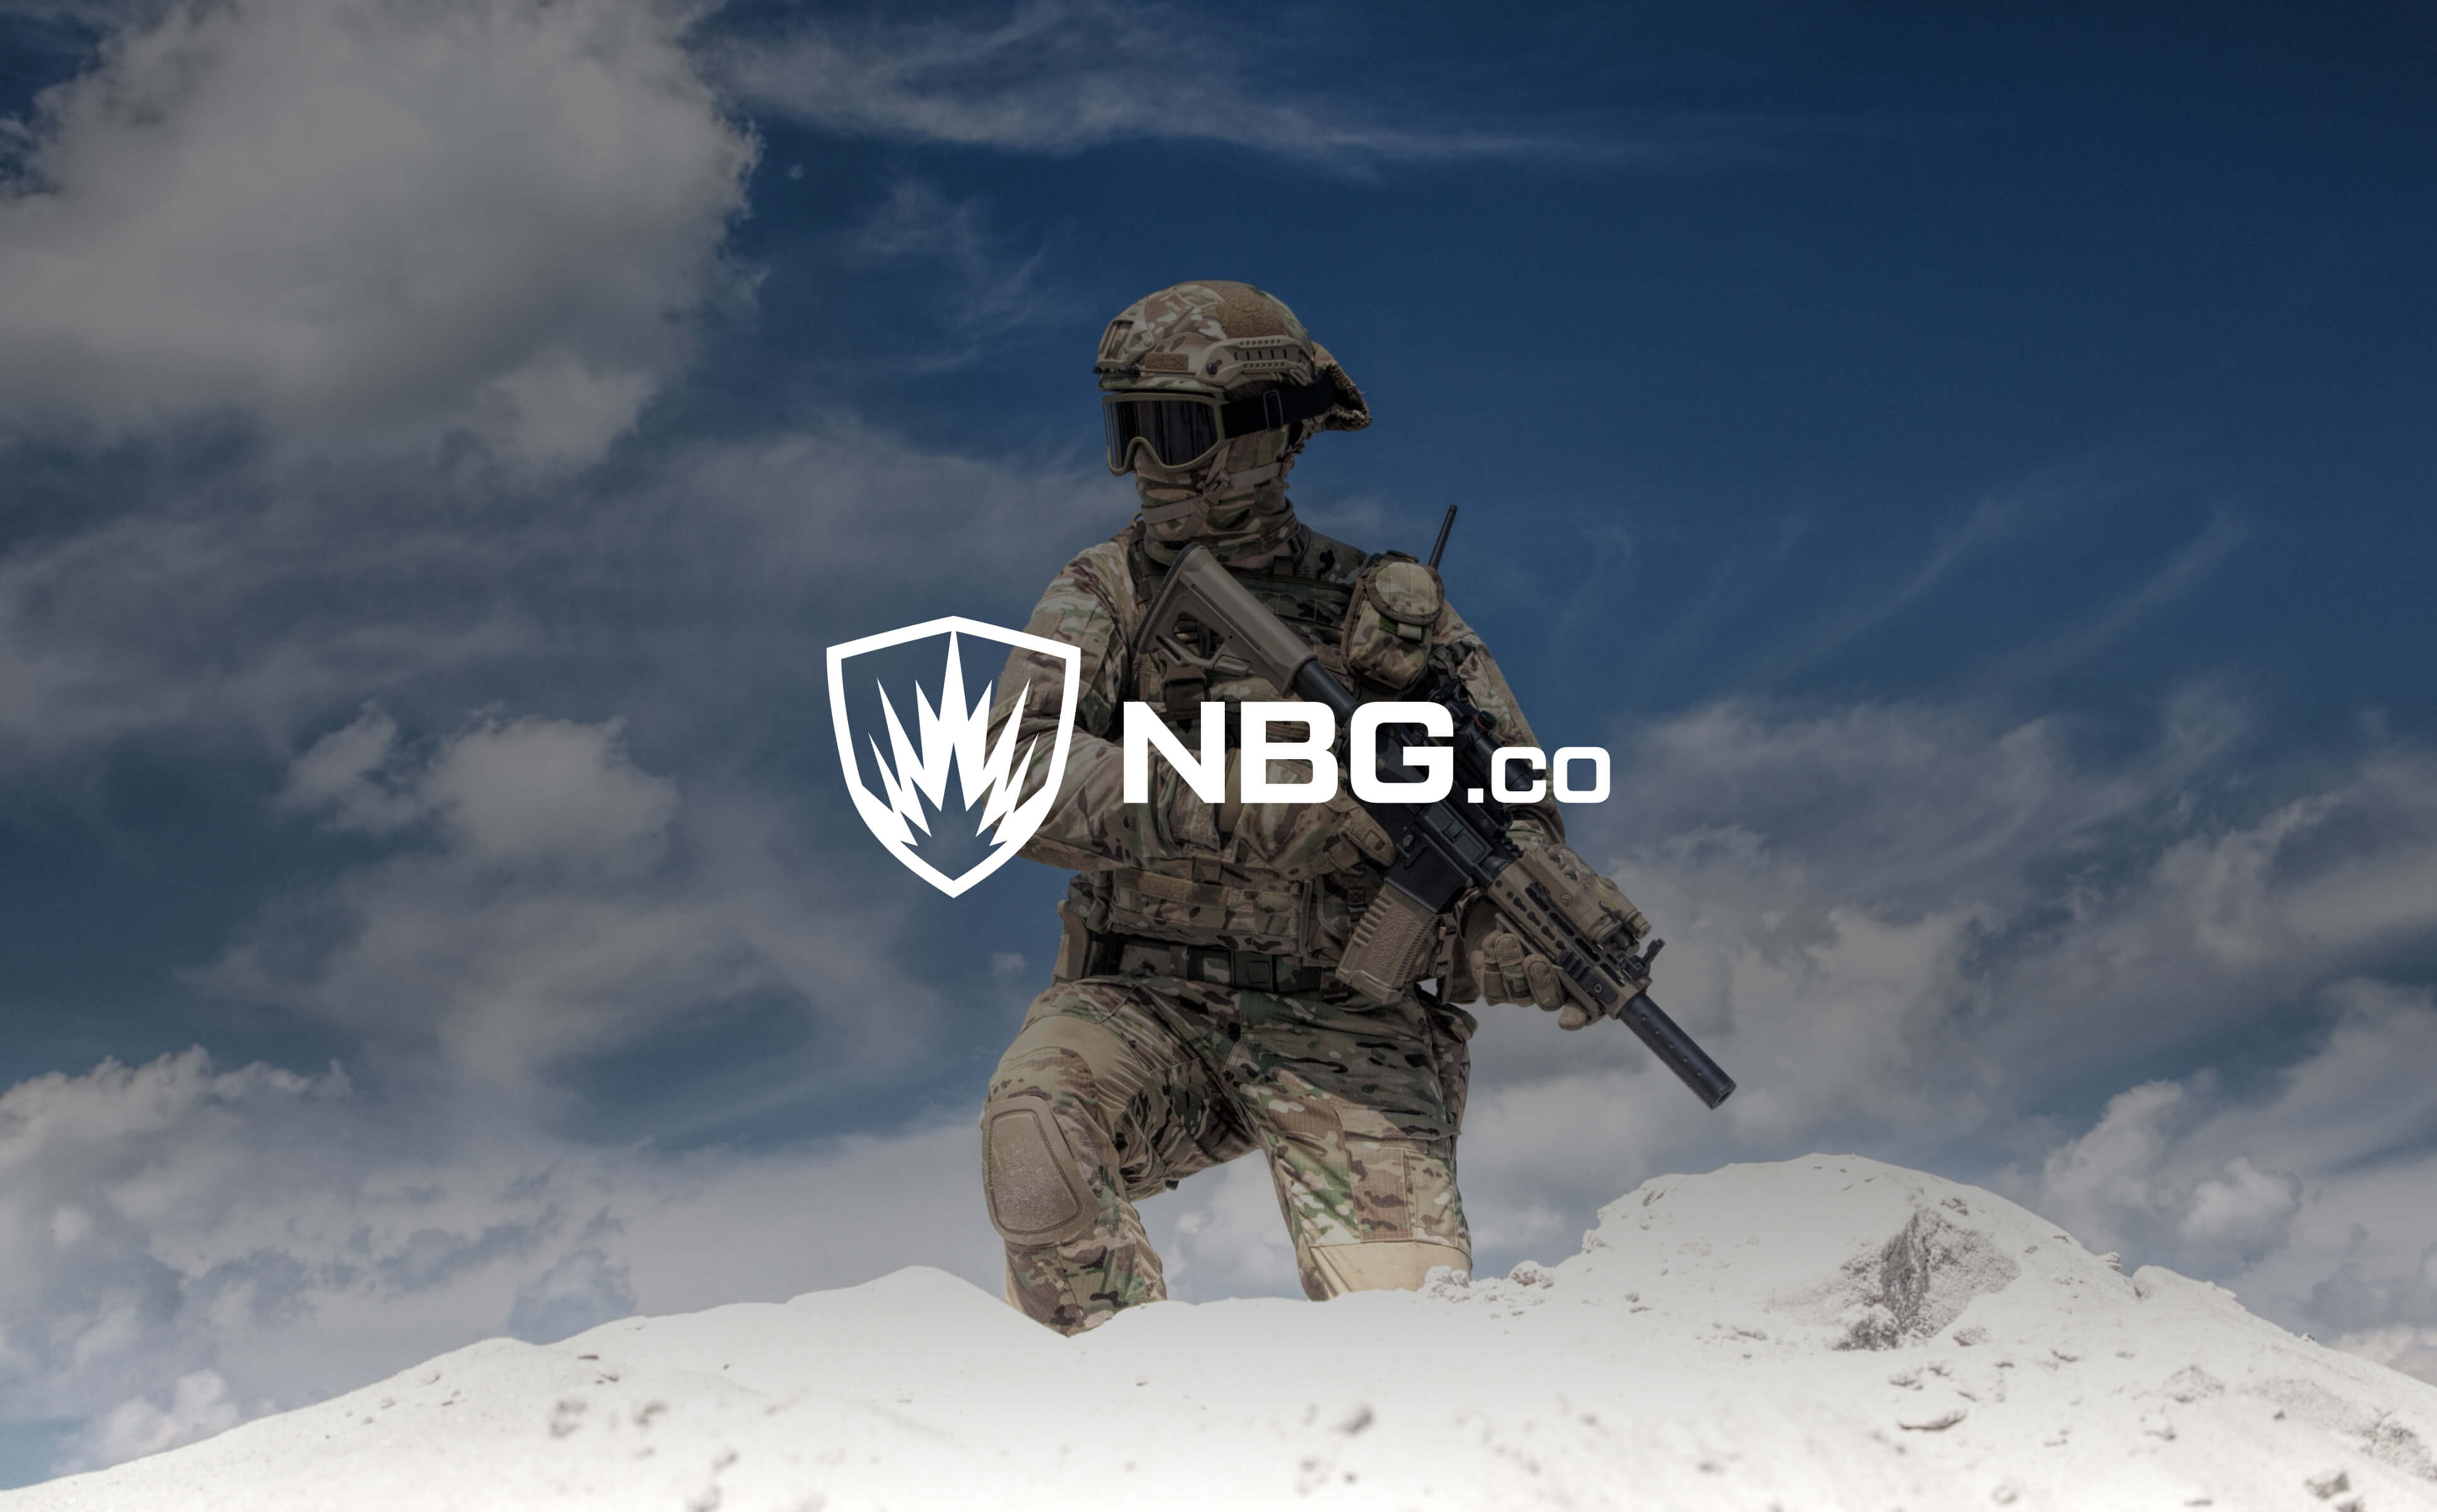 NBG Company